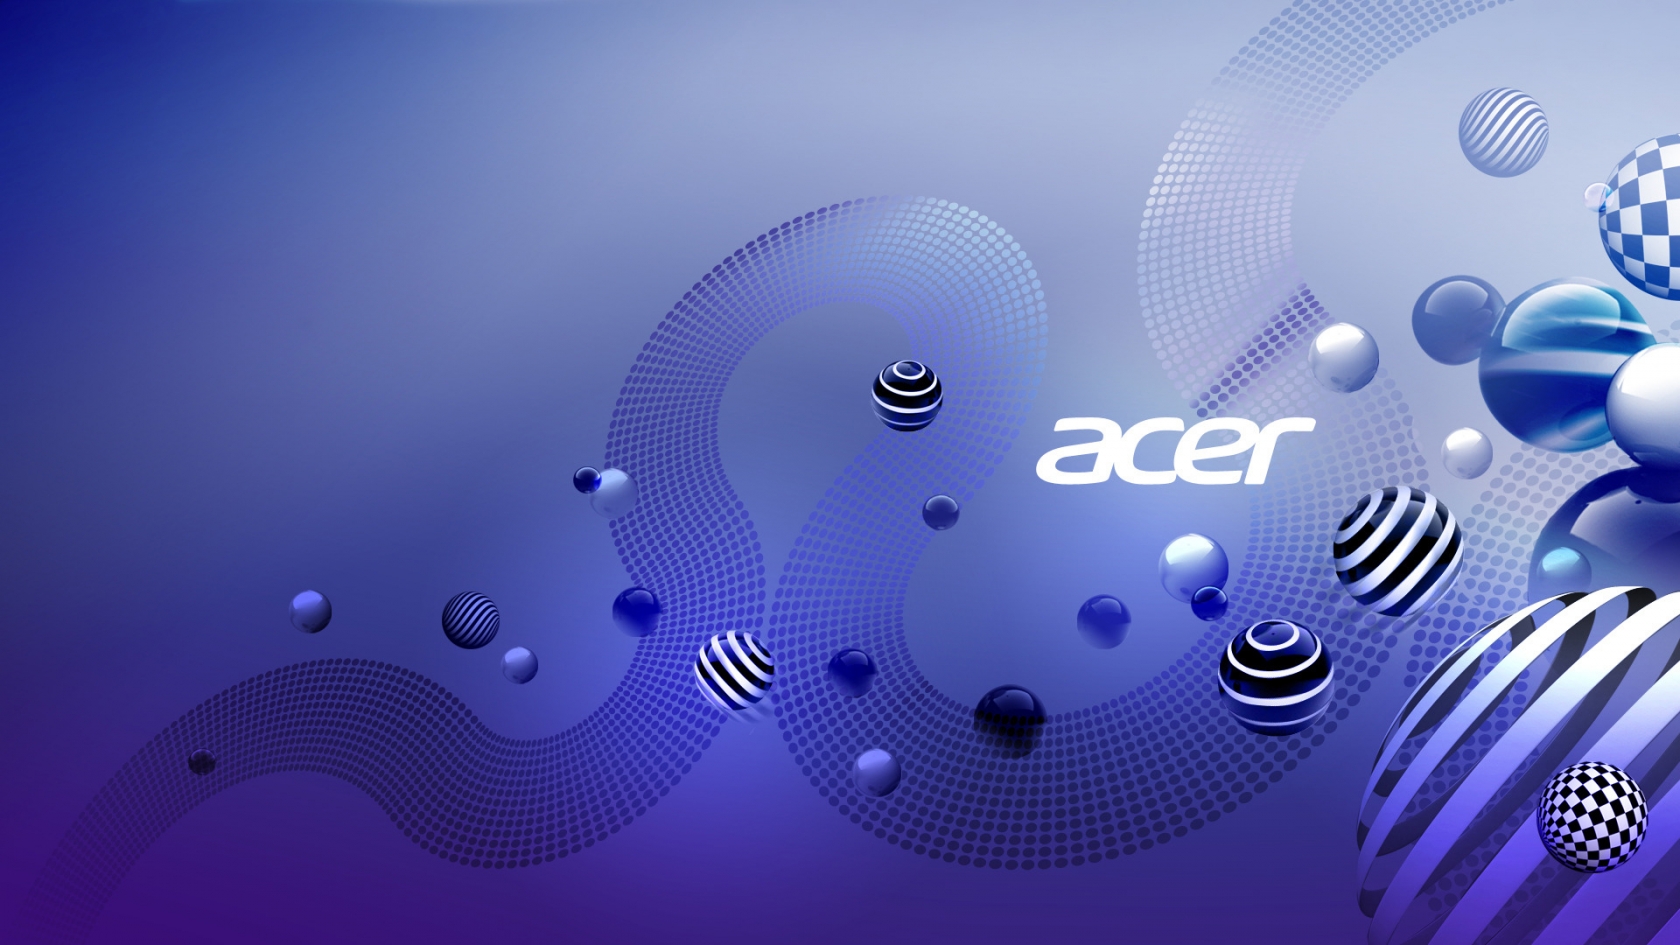 Acer Mauve World for 1680 x 945 HDTV resolution